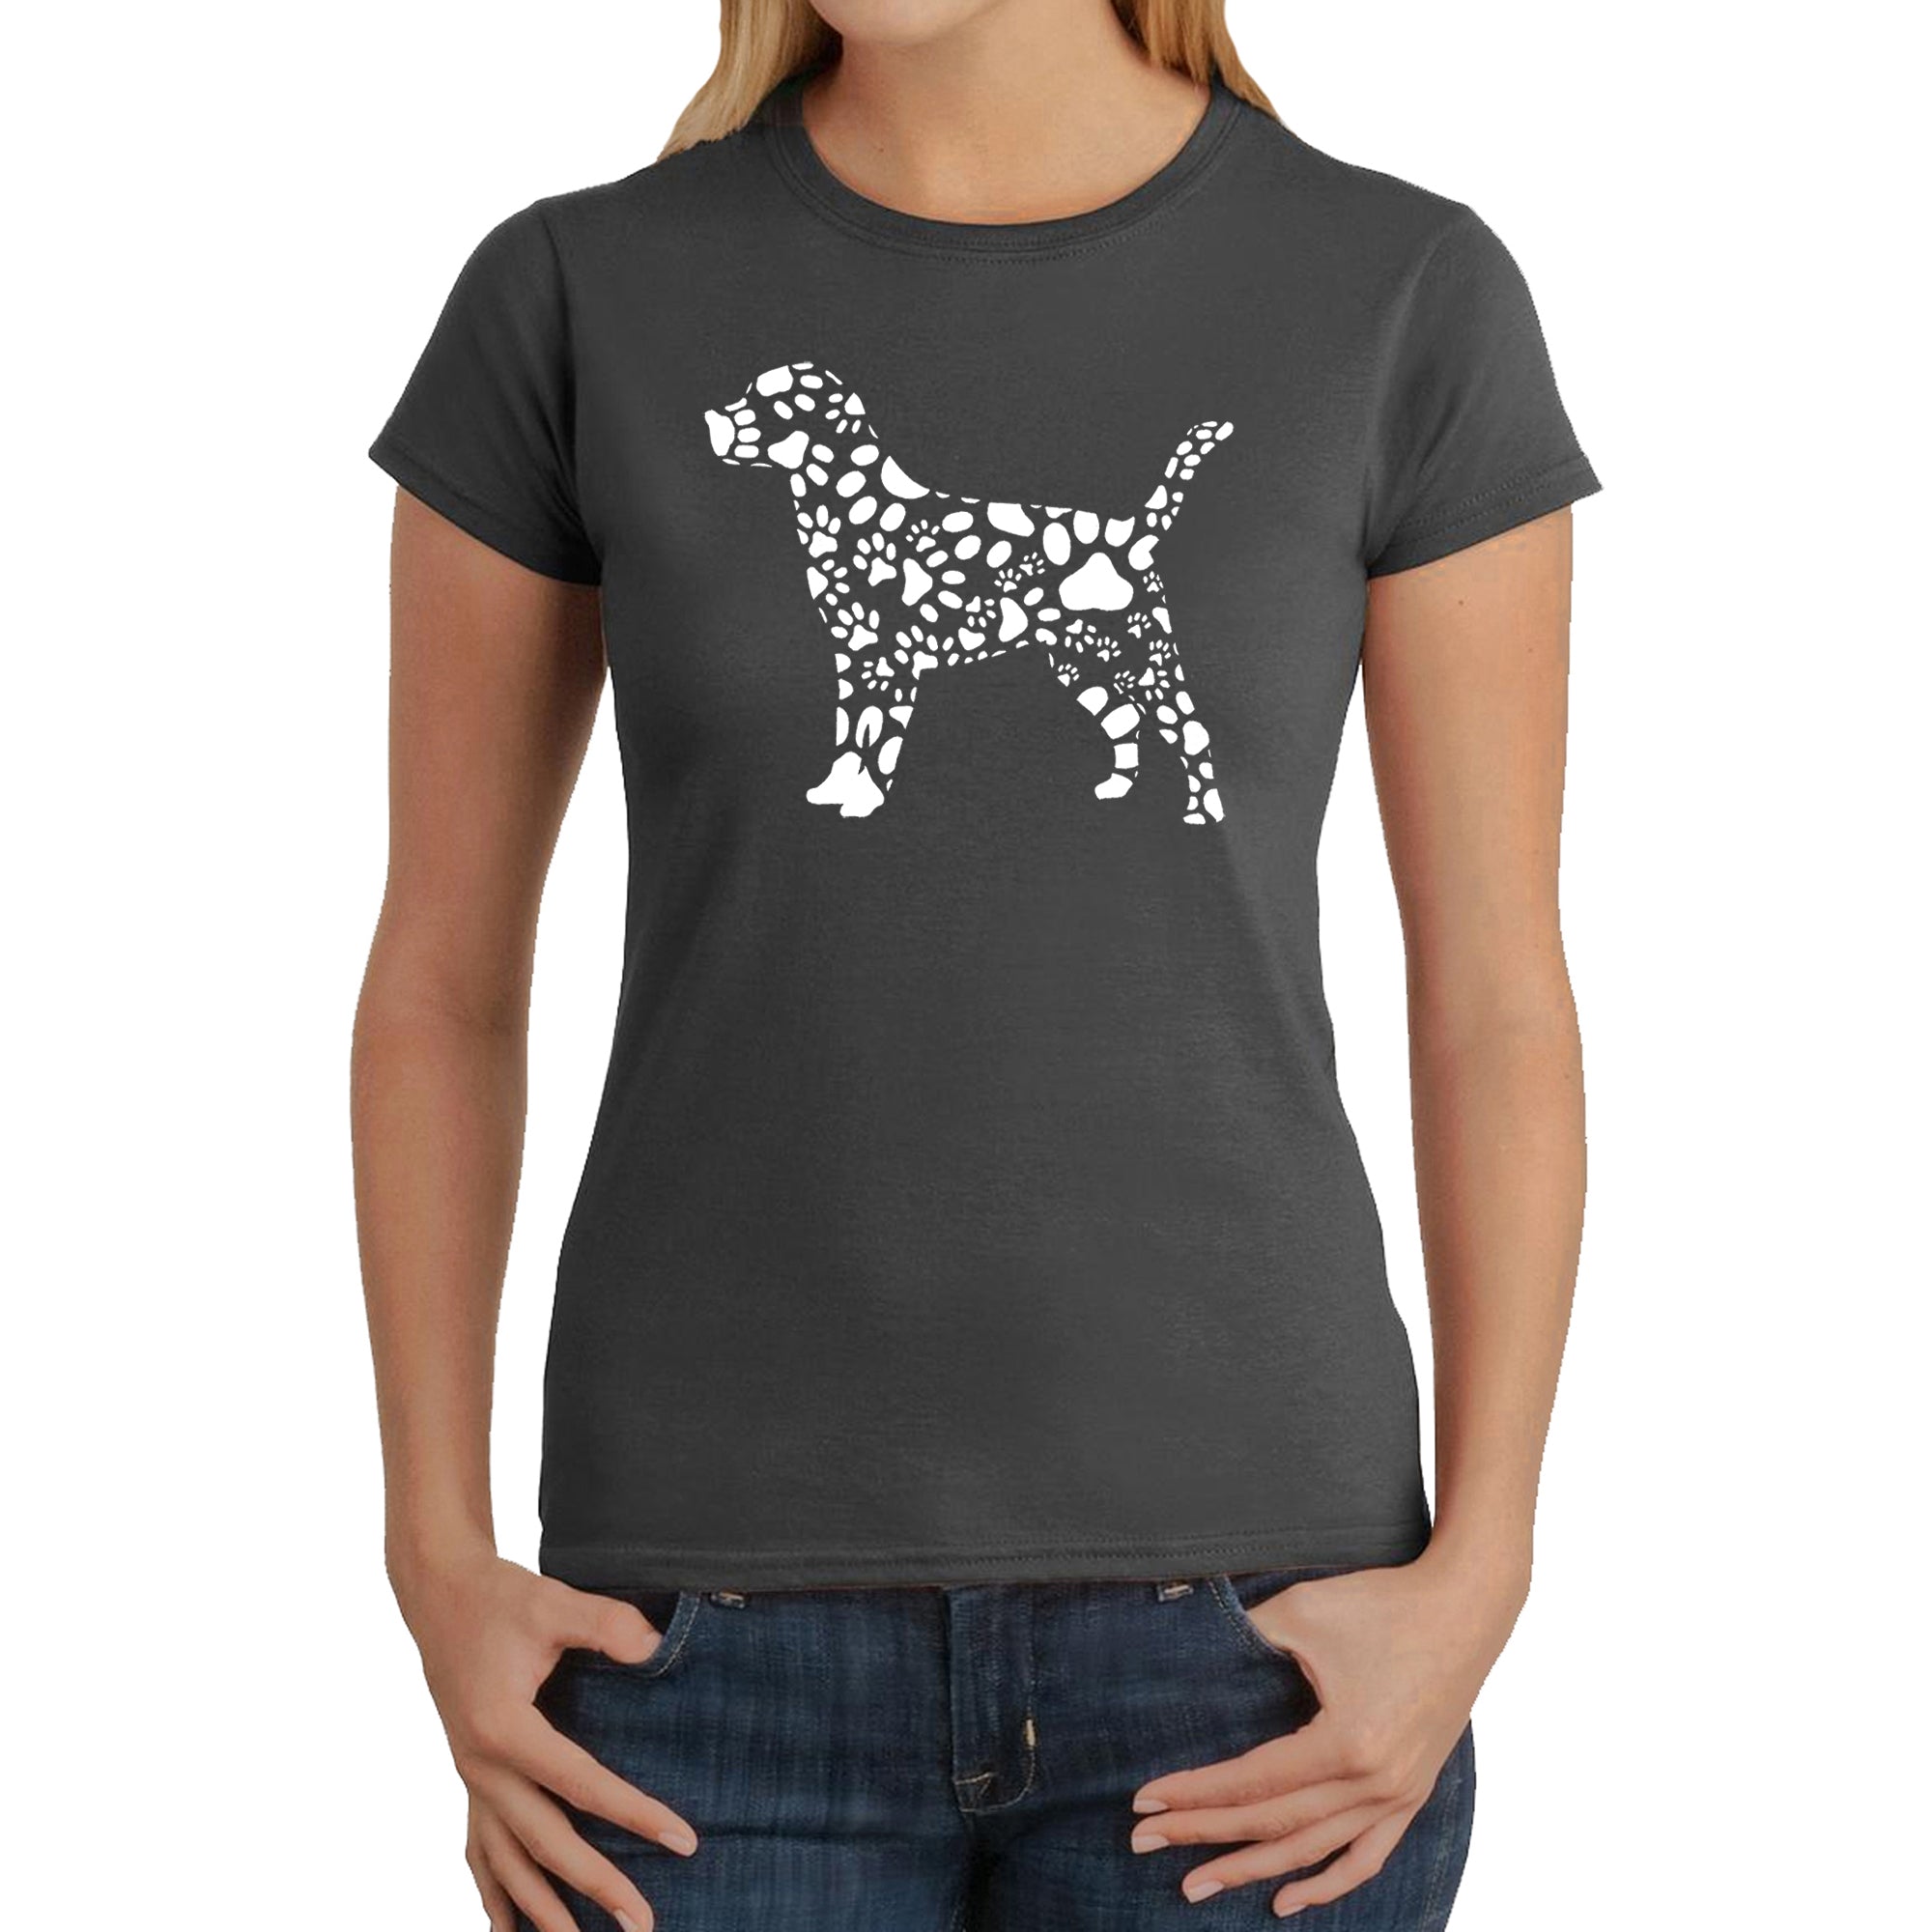 Dog Paw Prints - Women's Word Art T-Shirt - Grey - X-Large